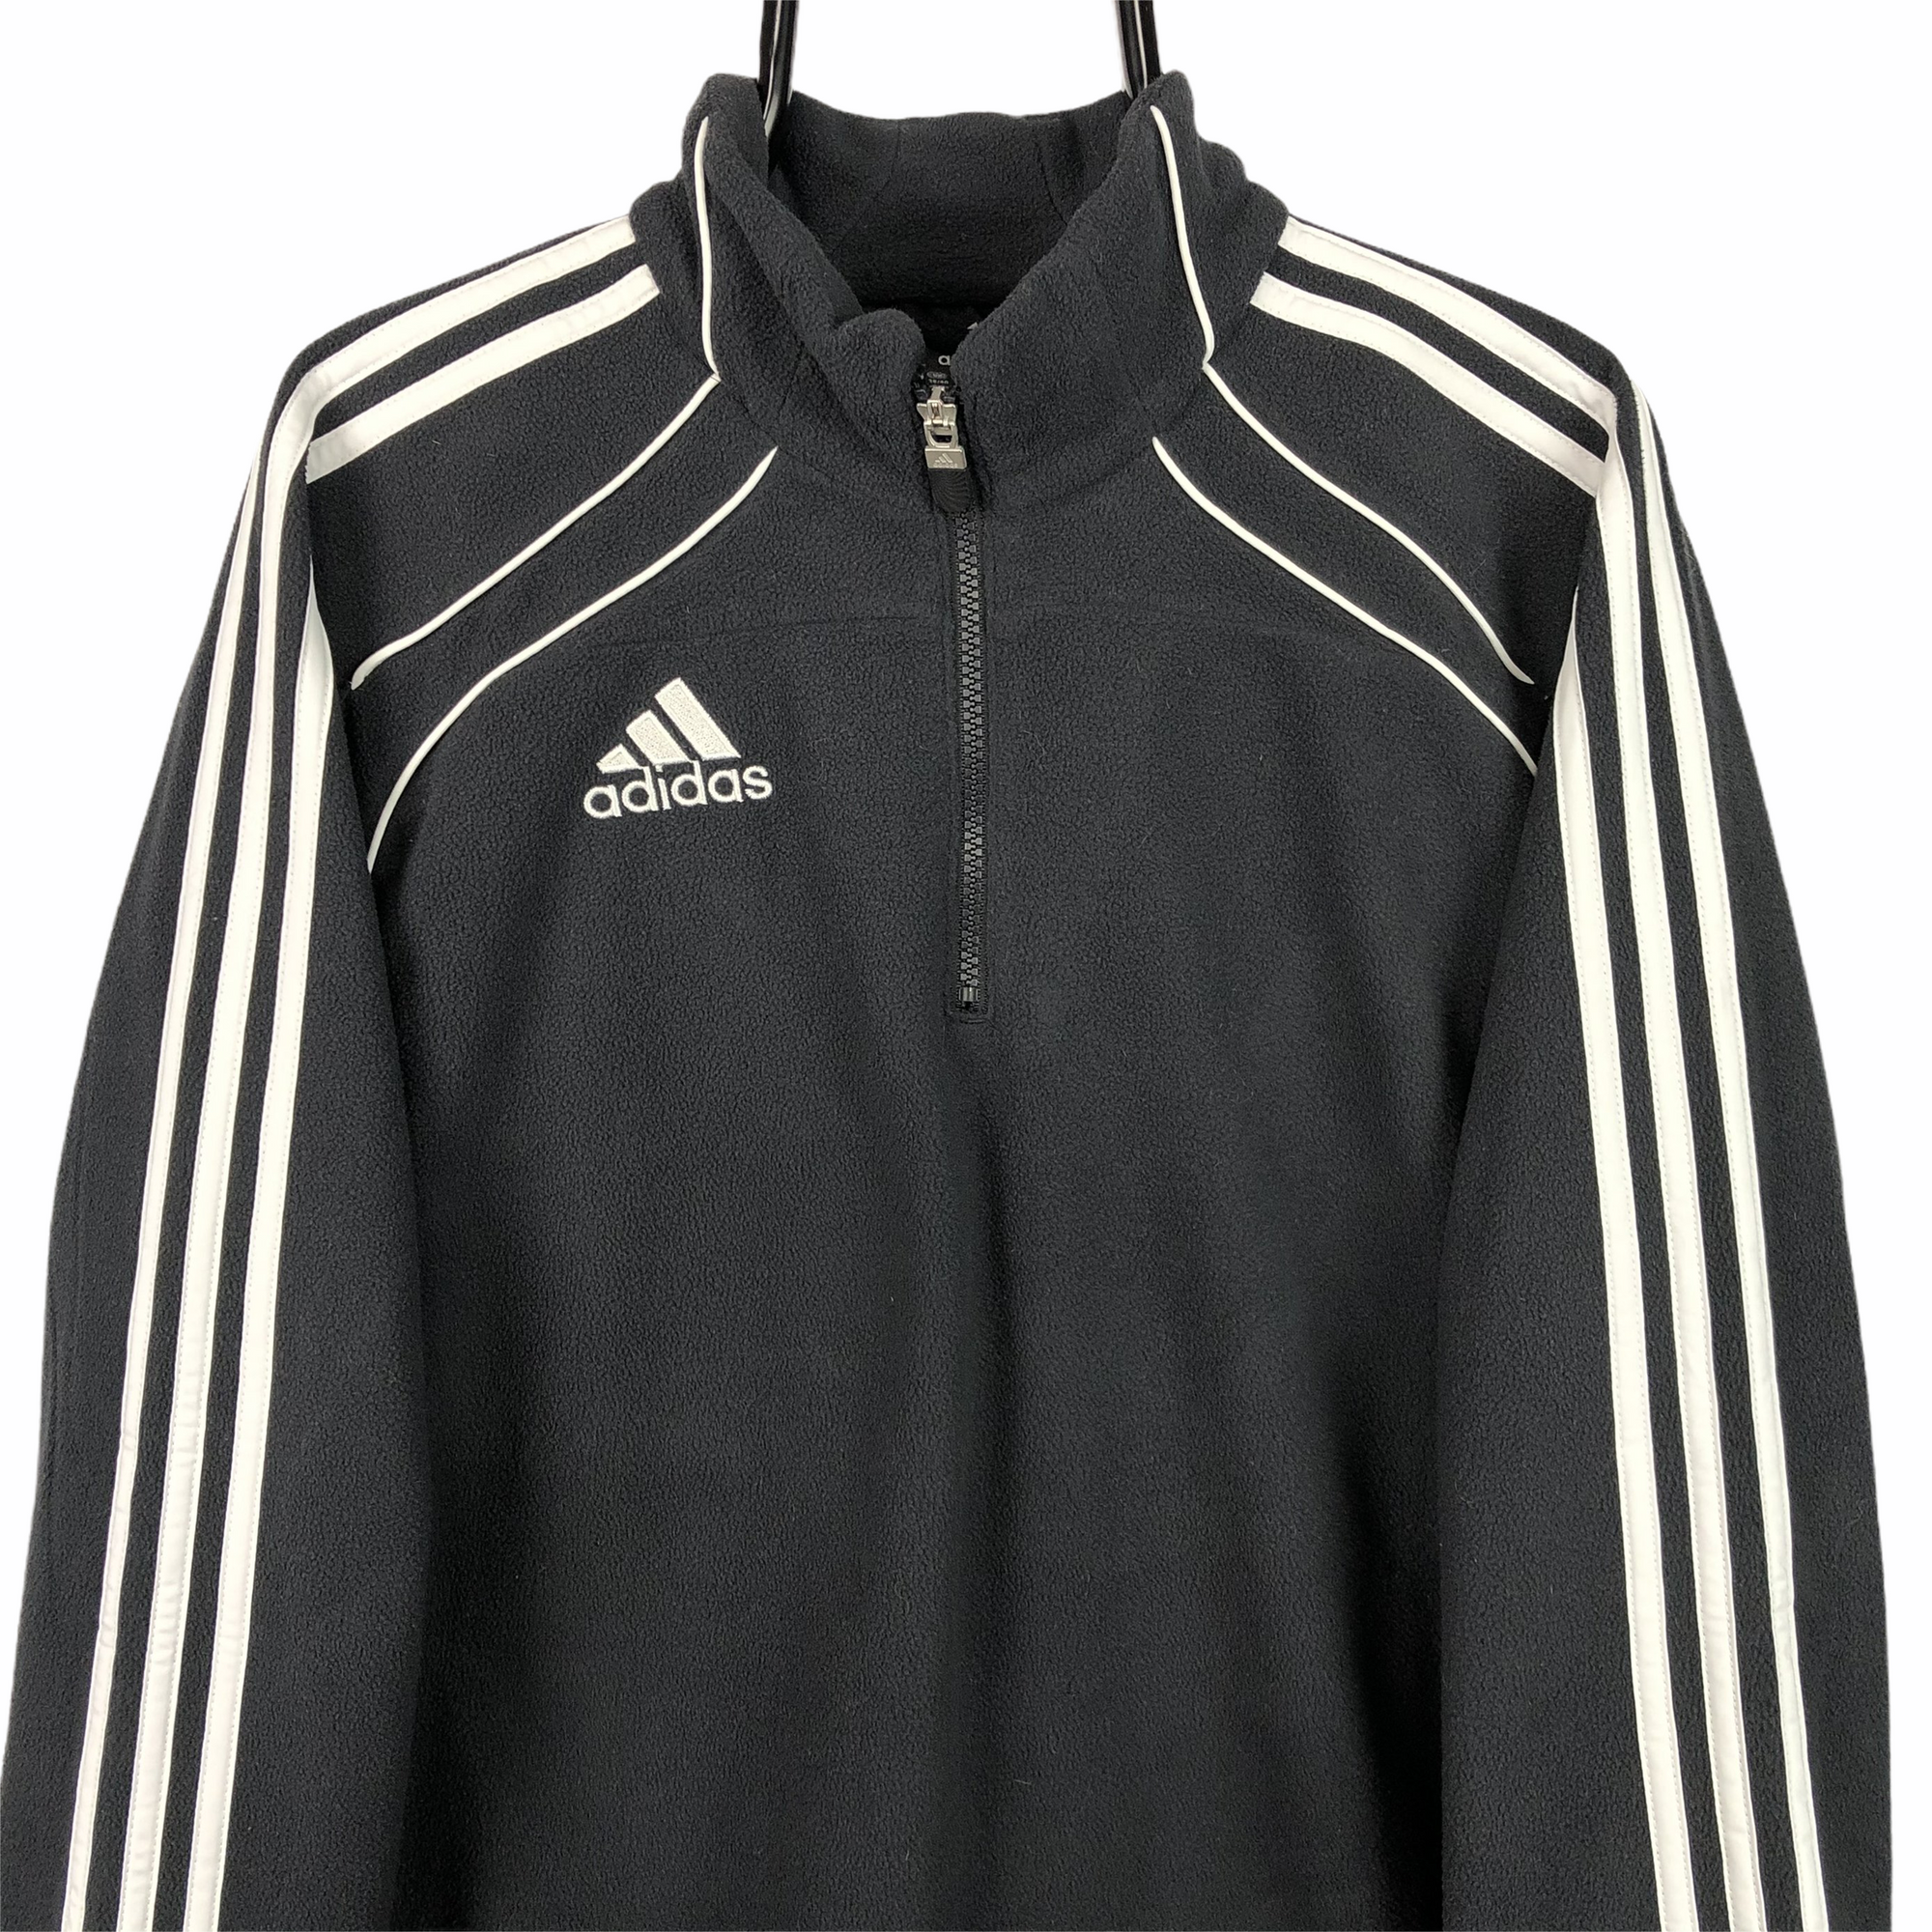 Adidas 1/4 Zip Fleece in Black/White - Men's Medium/Women's Large